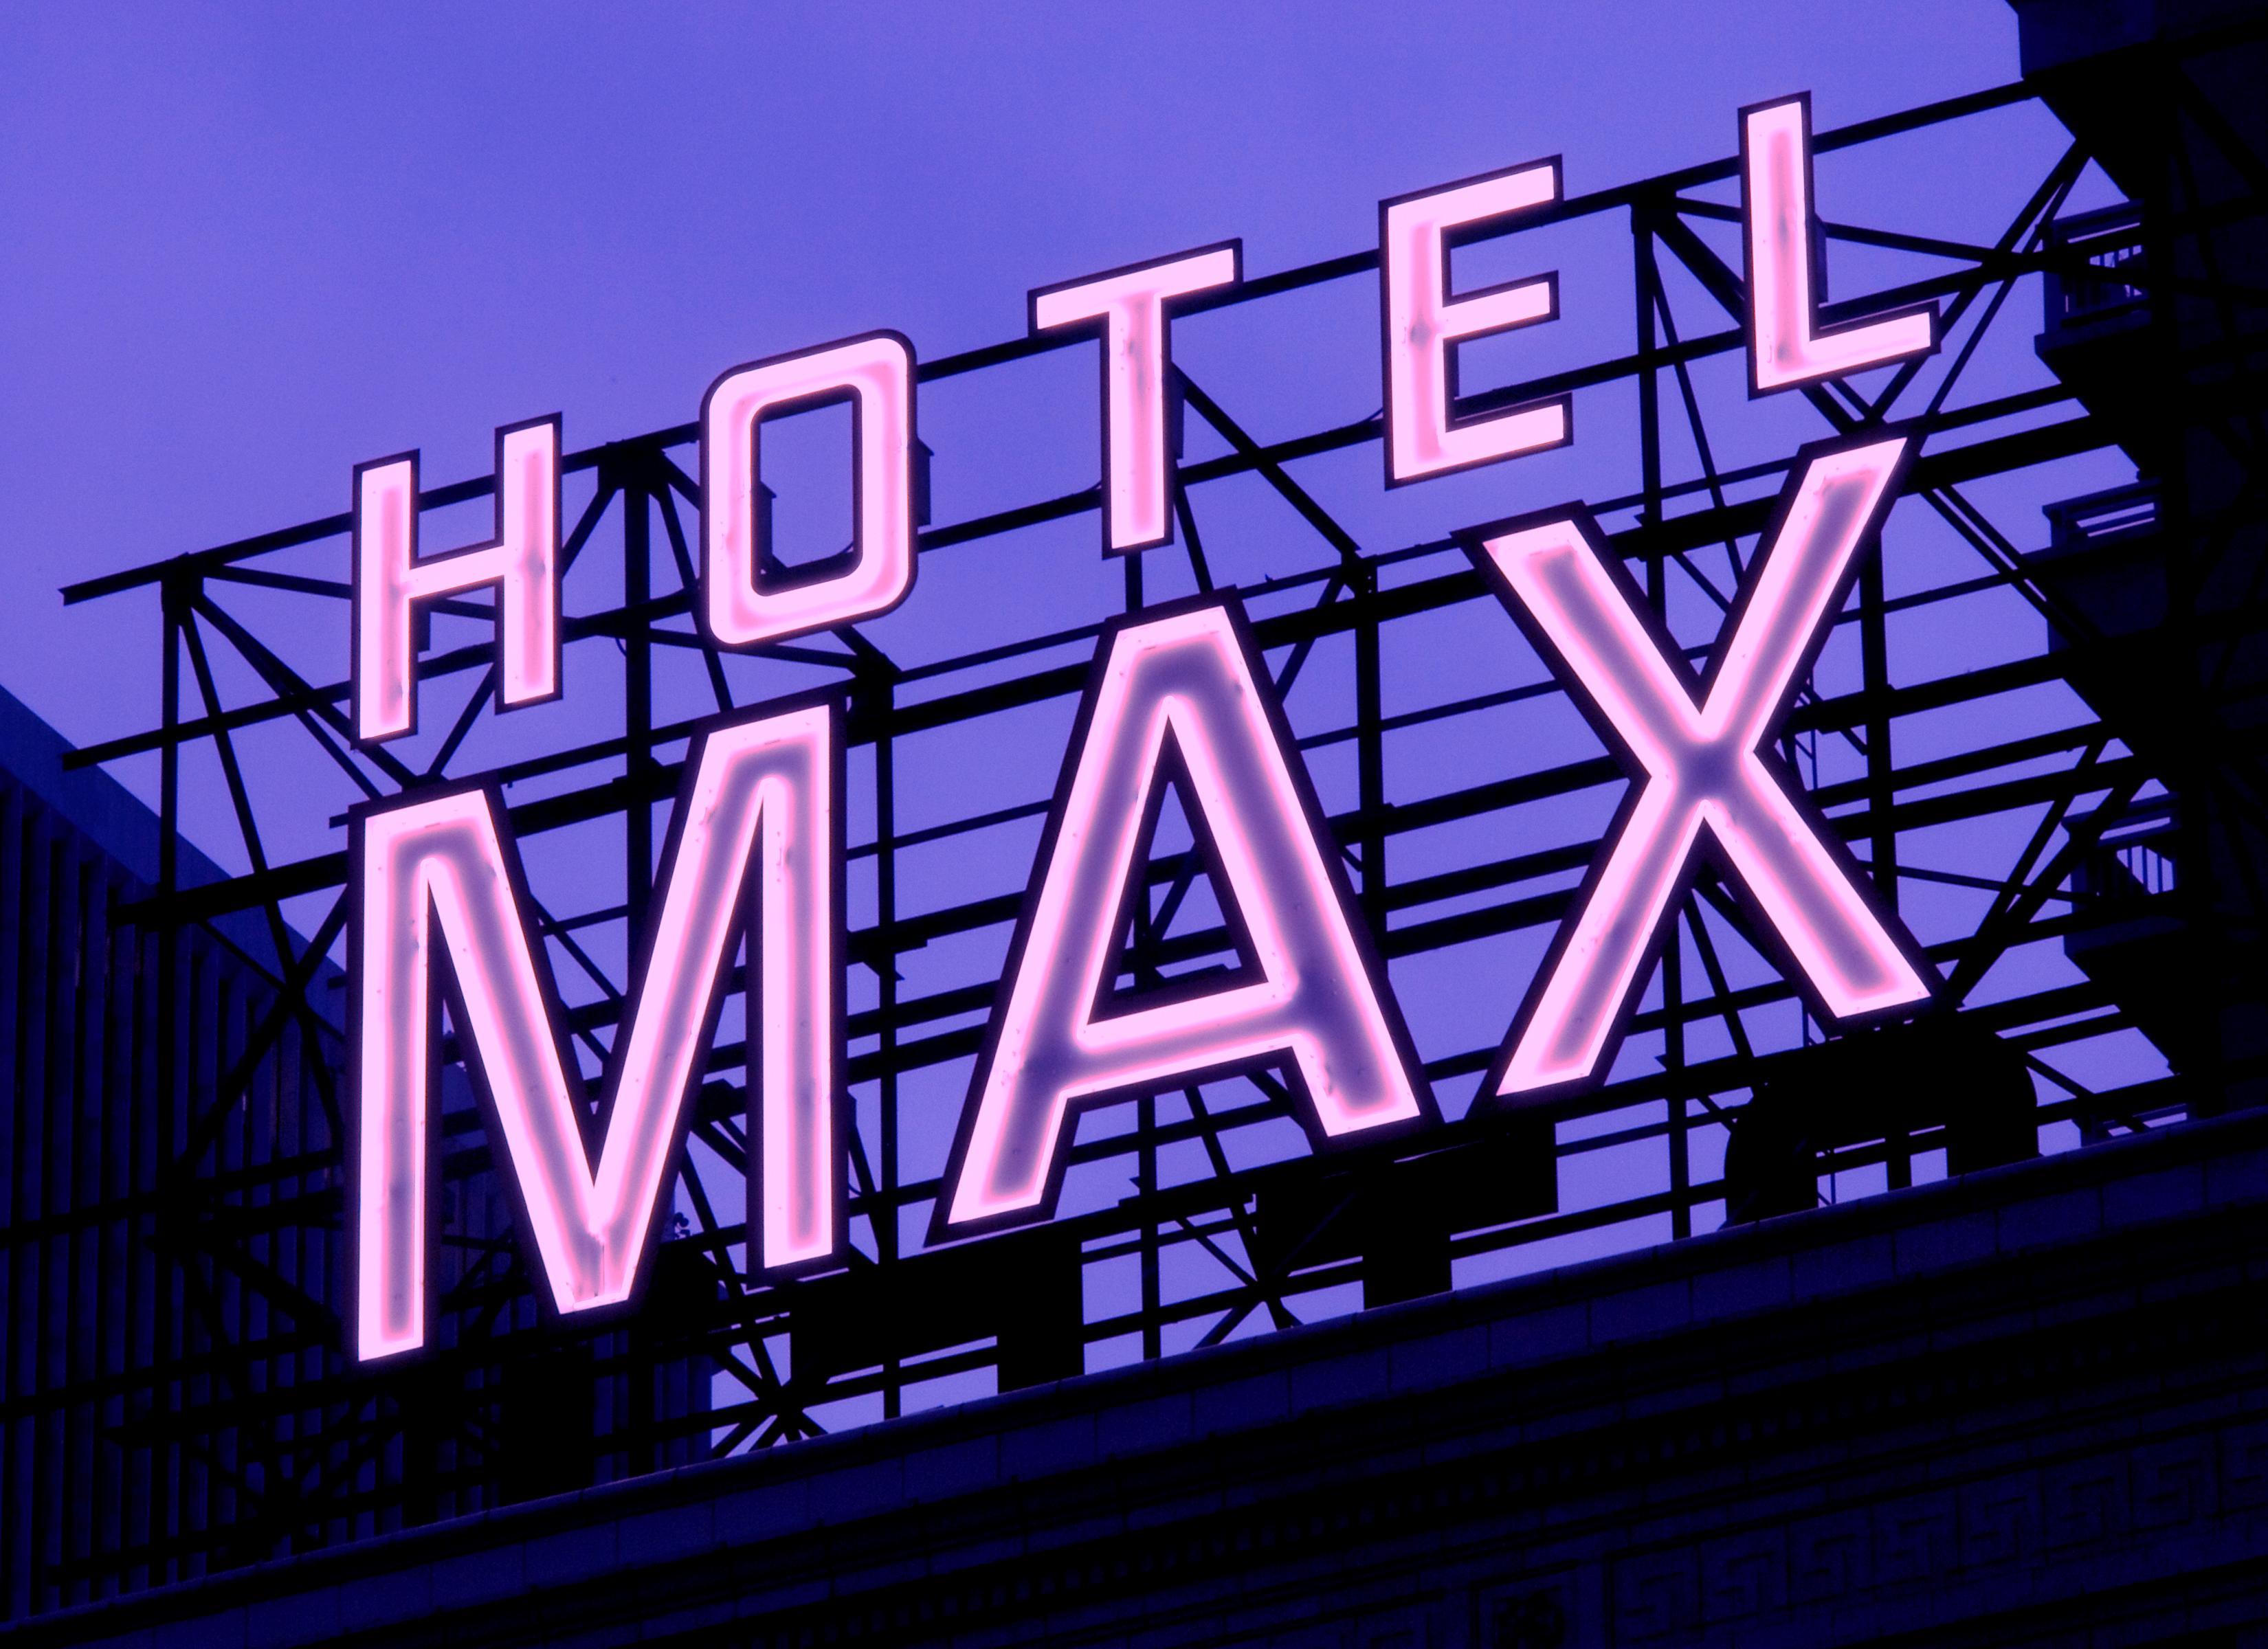 Hotel Max Seattle Exterior photo